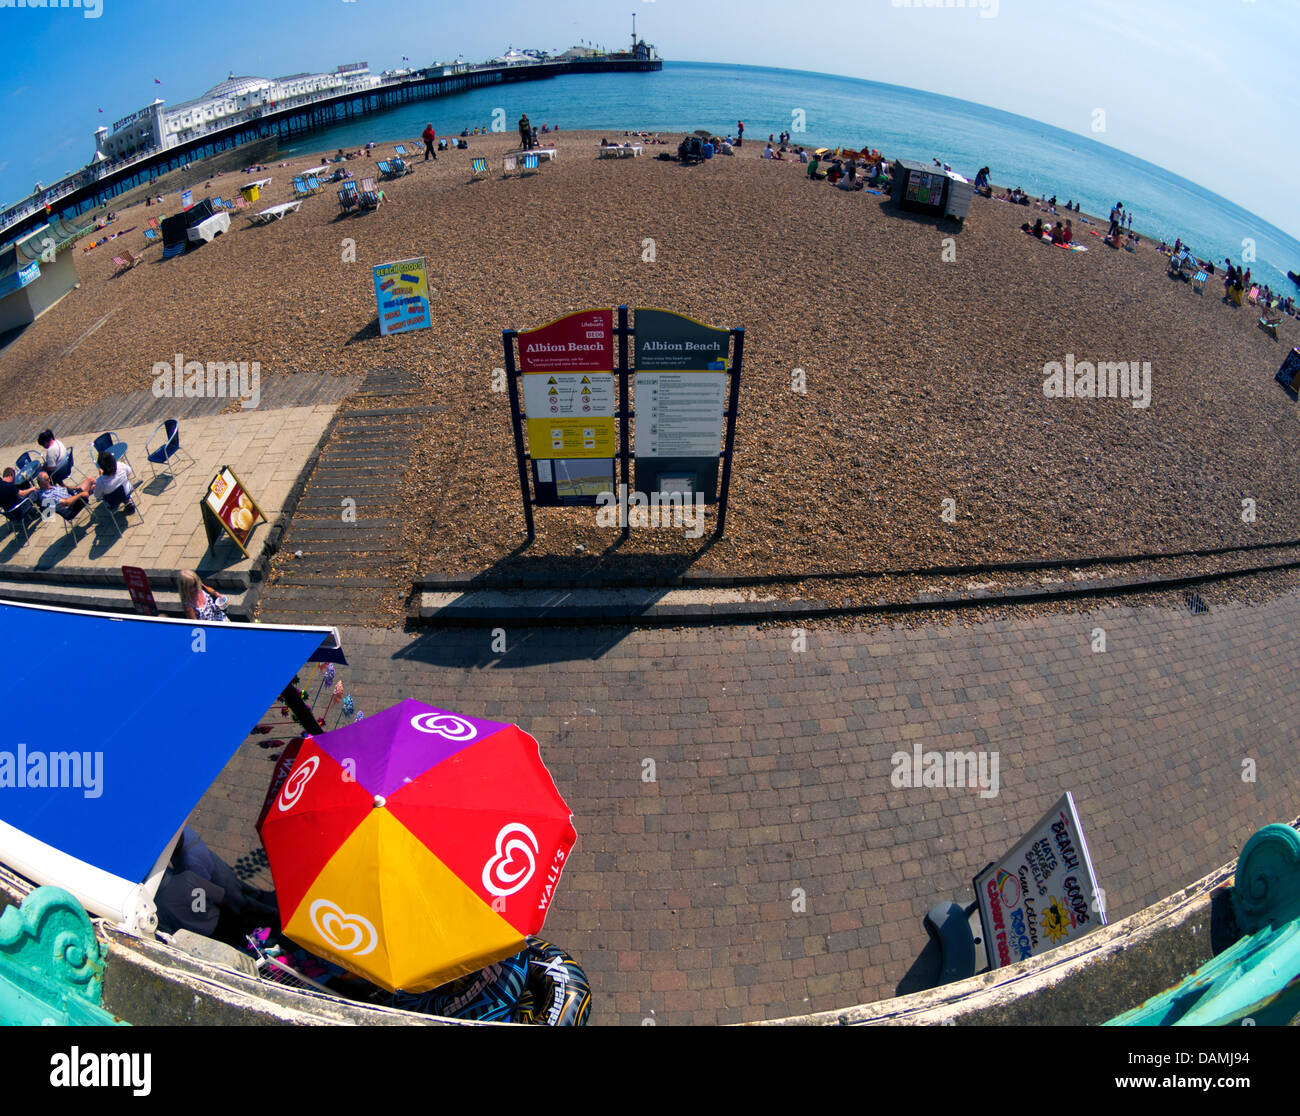 Planet Brighton - Albion Beach and Brighton Pier - extreme wide-angle picture Stock Photo